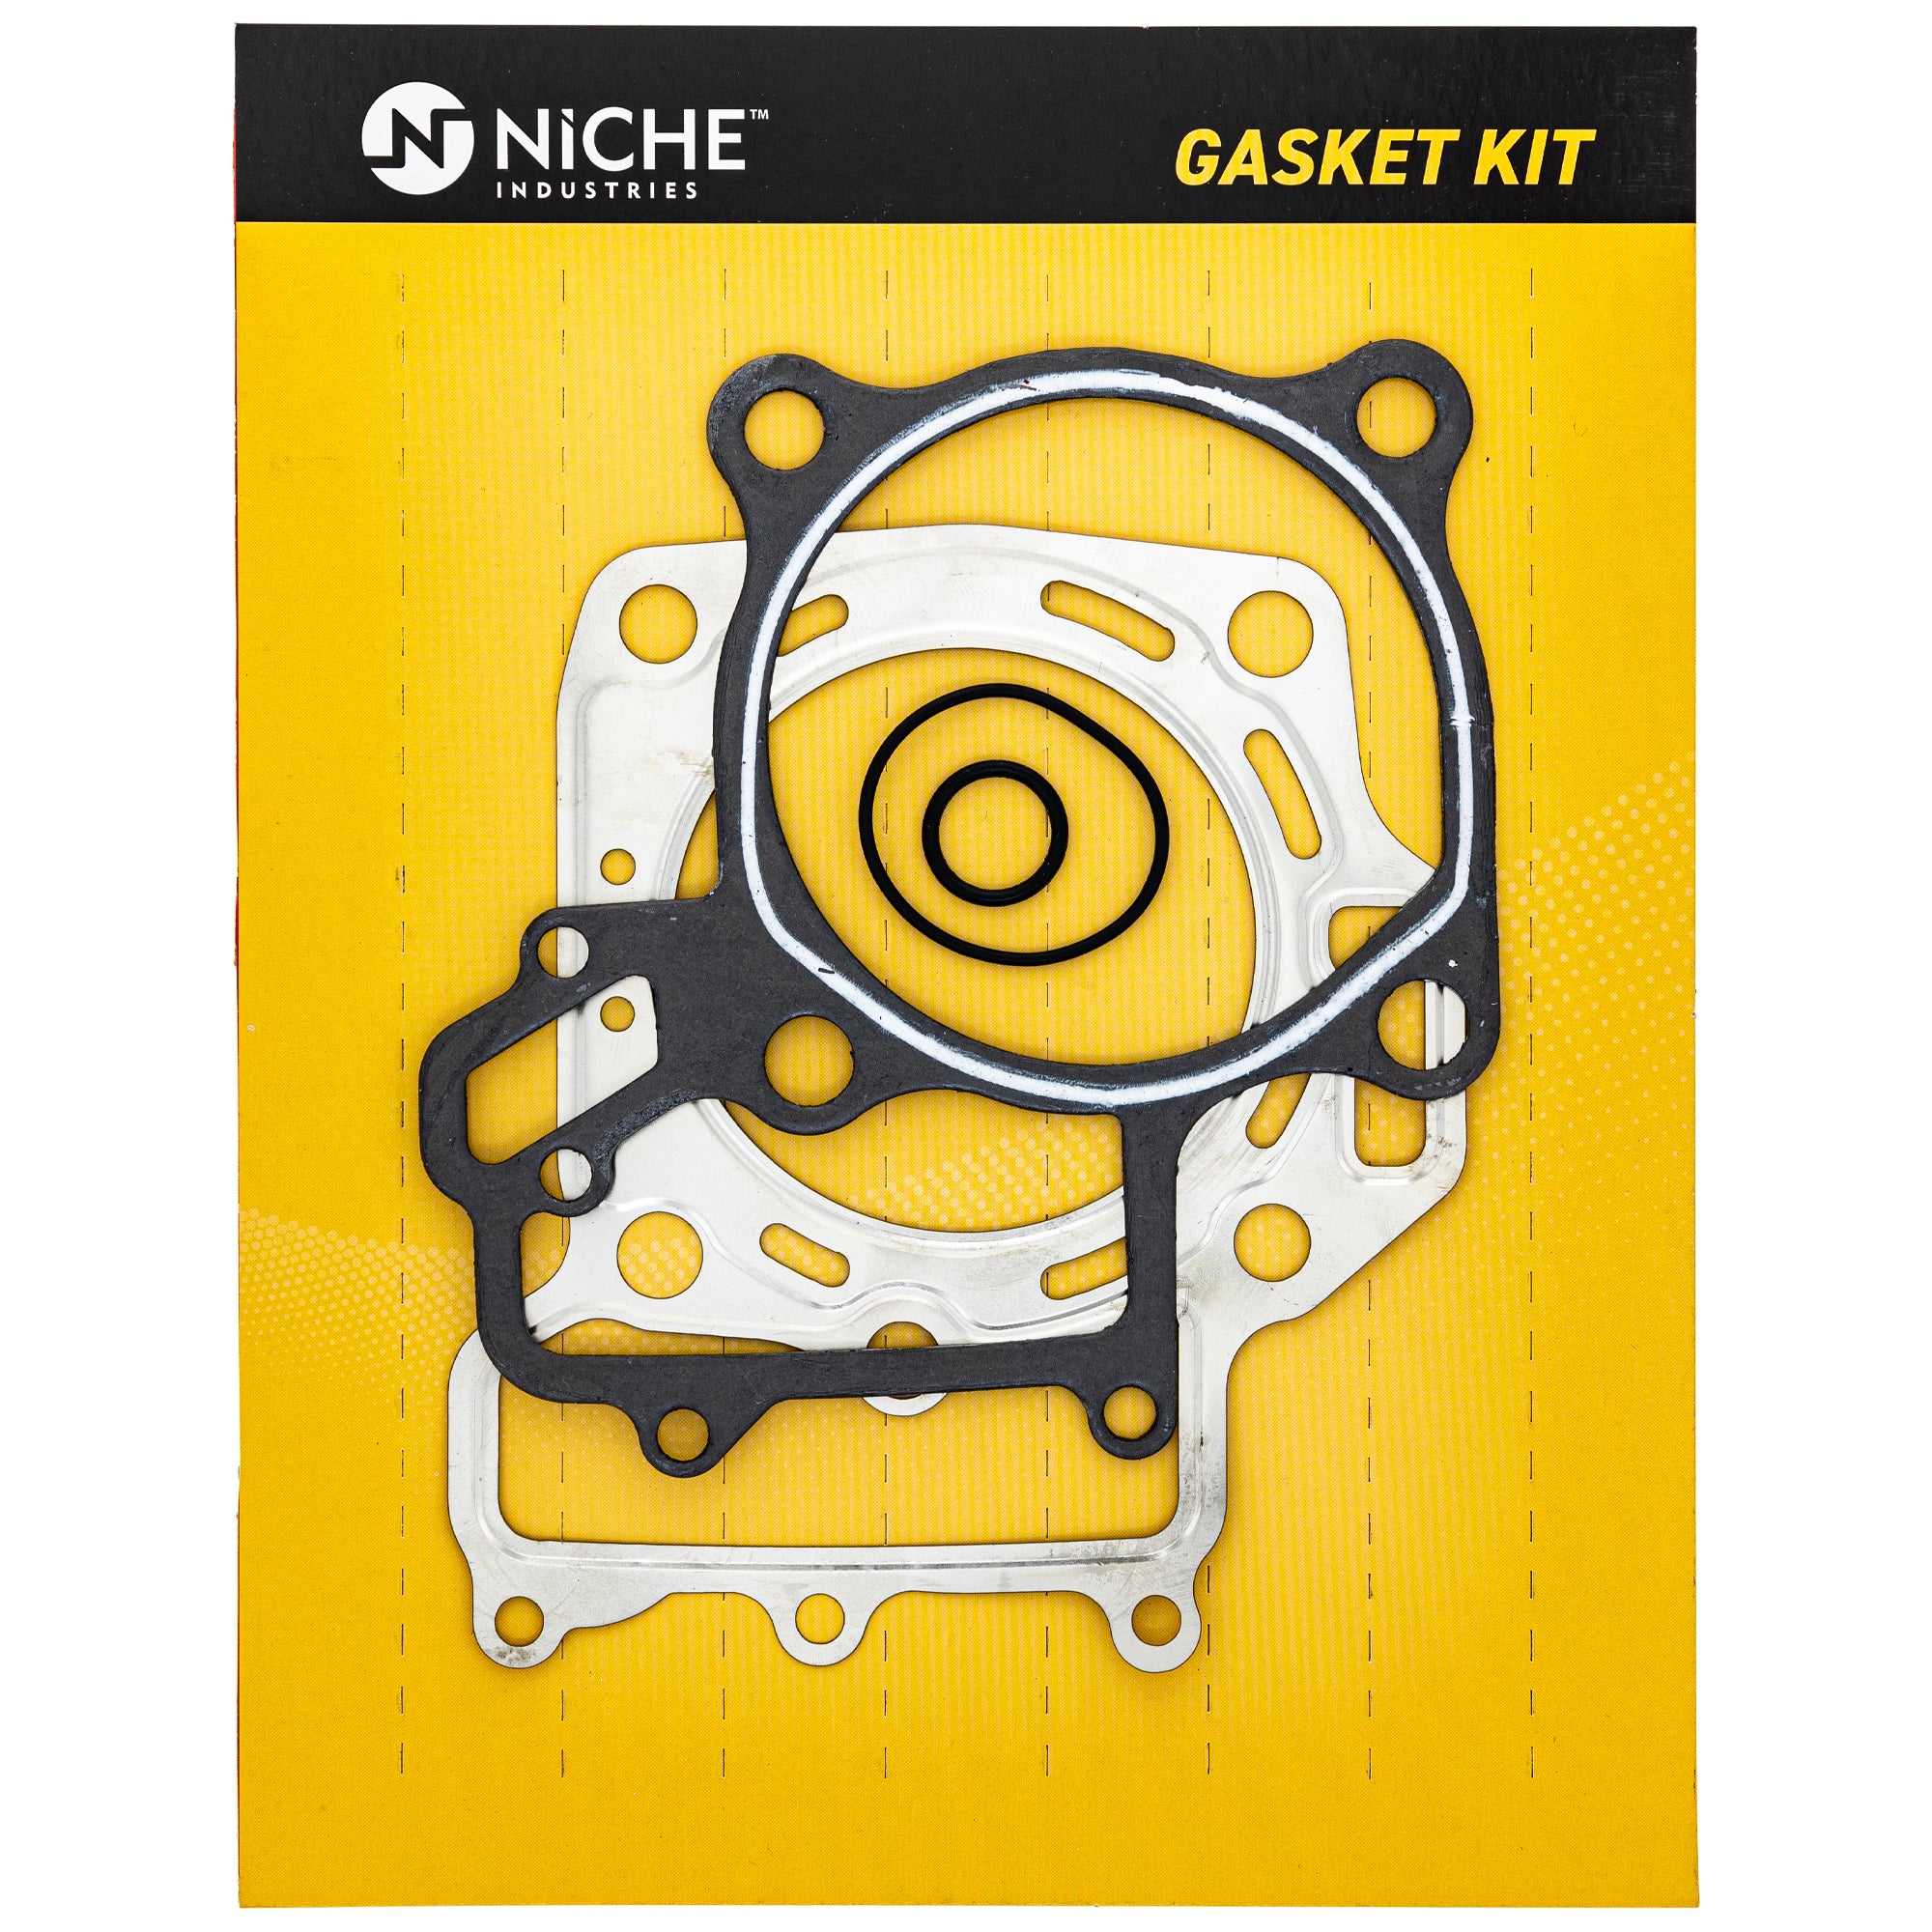 NICHE 519-KGS2274K Gasket Kit for Prairie KFX700